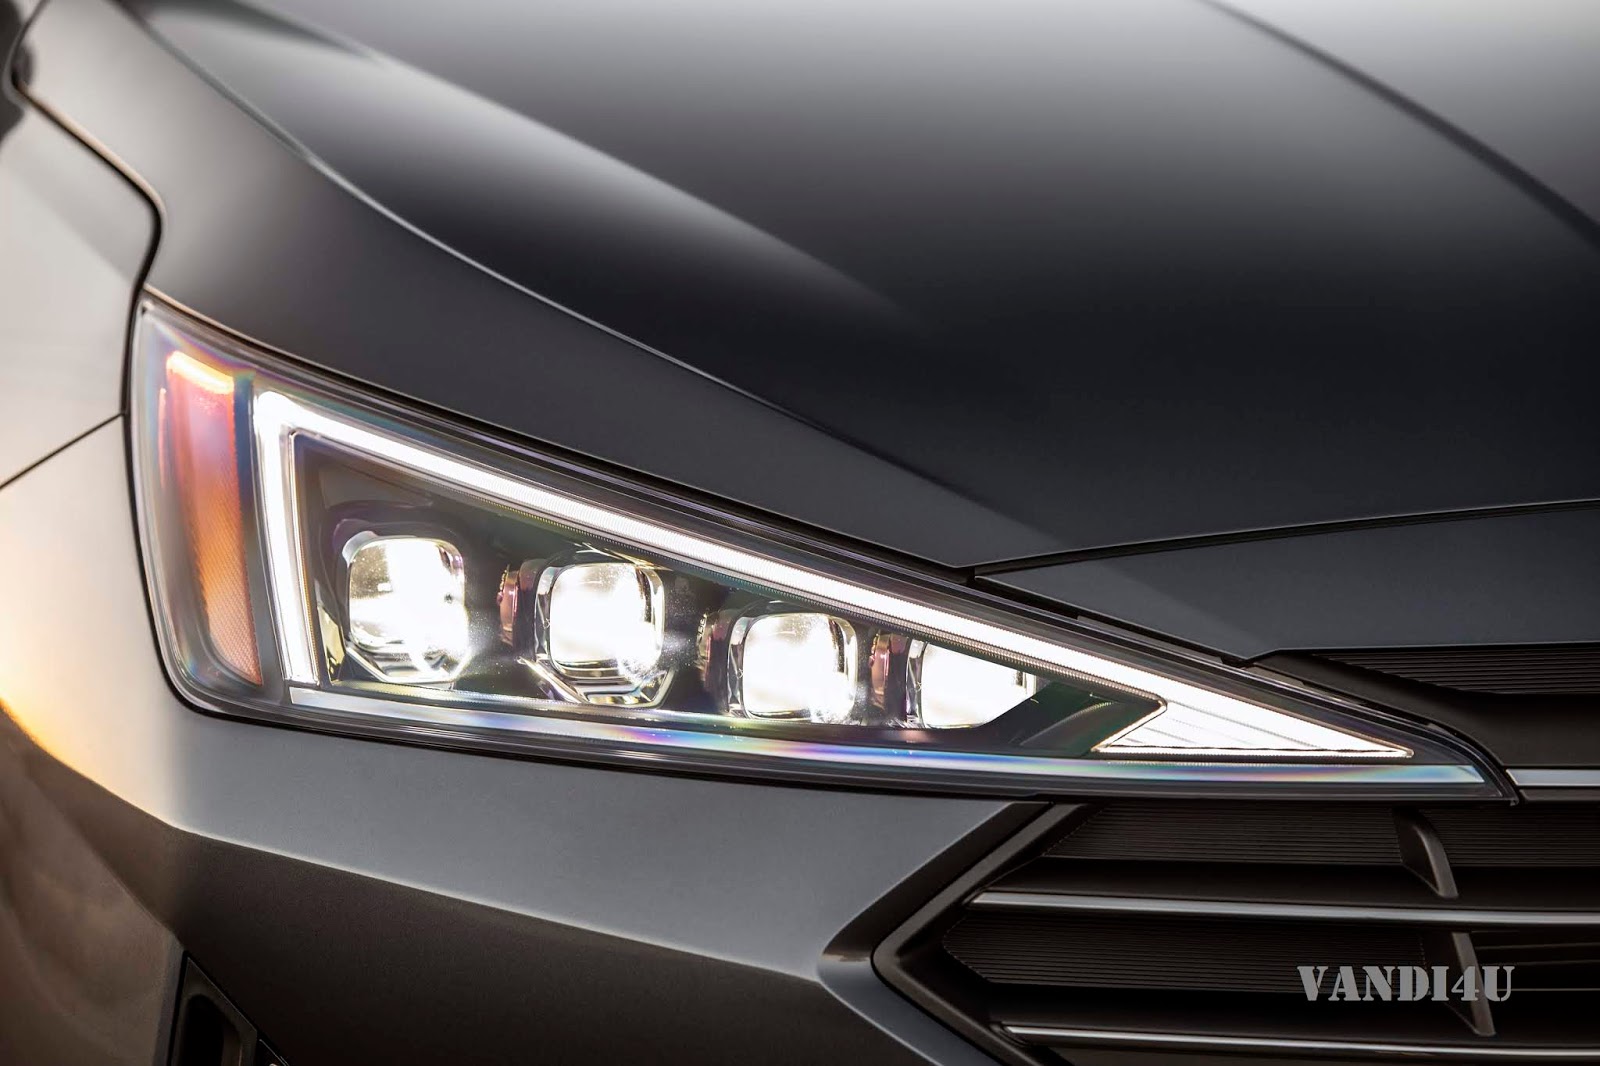 2020 Hyundai Elantra: Top 5 things to know | VANDI4U